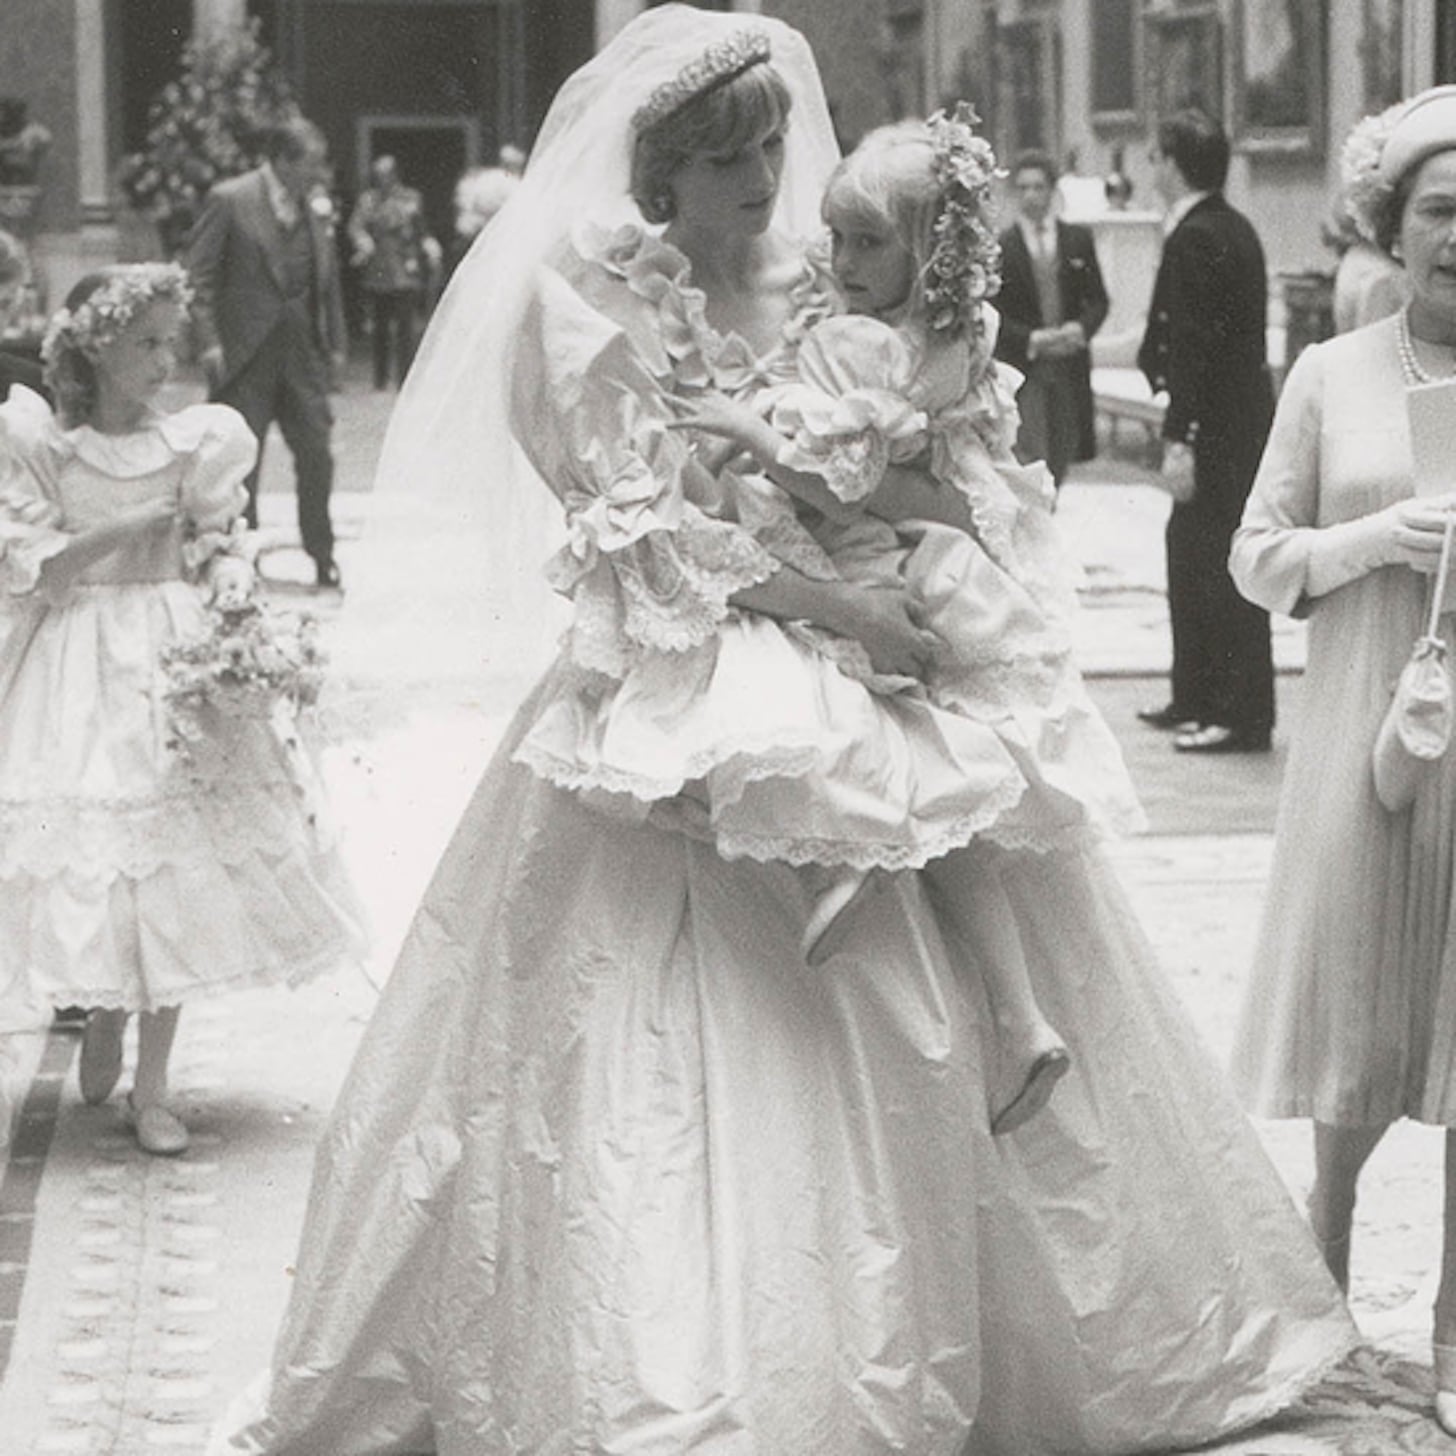 Modern wedding dresses like Princess Diana's